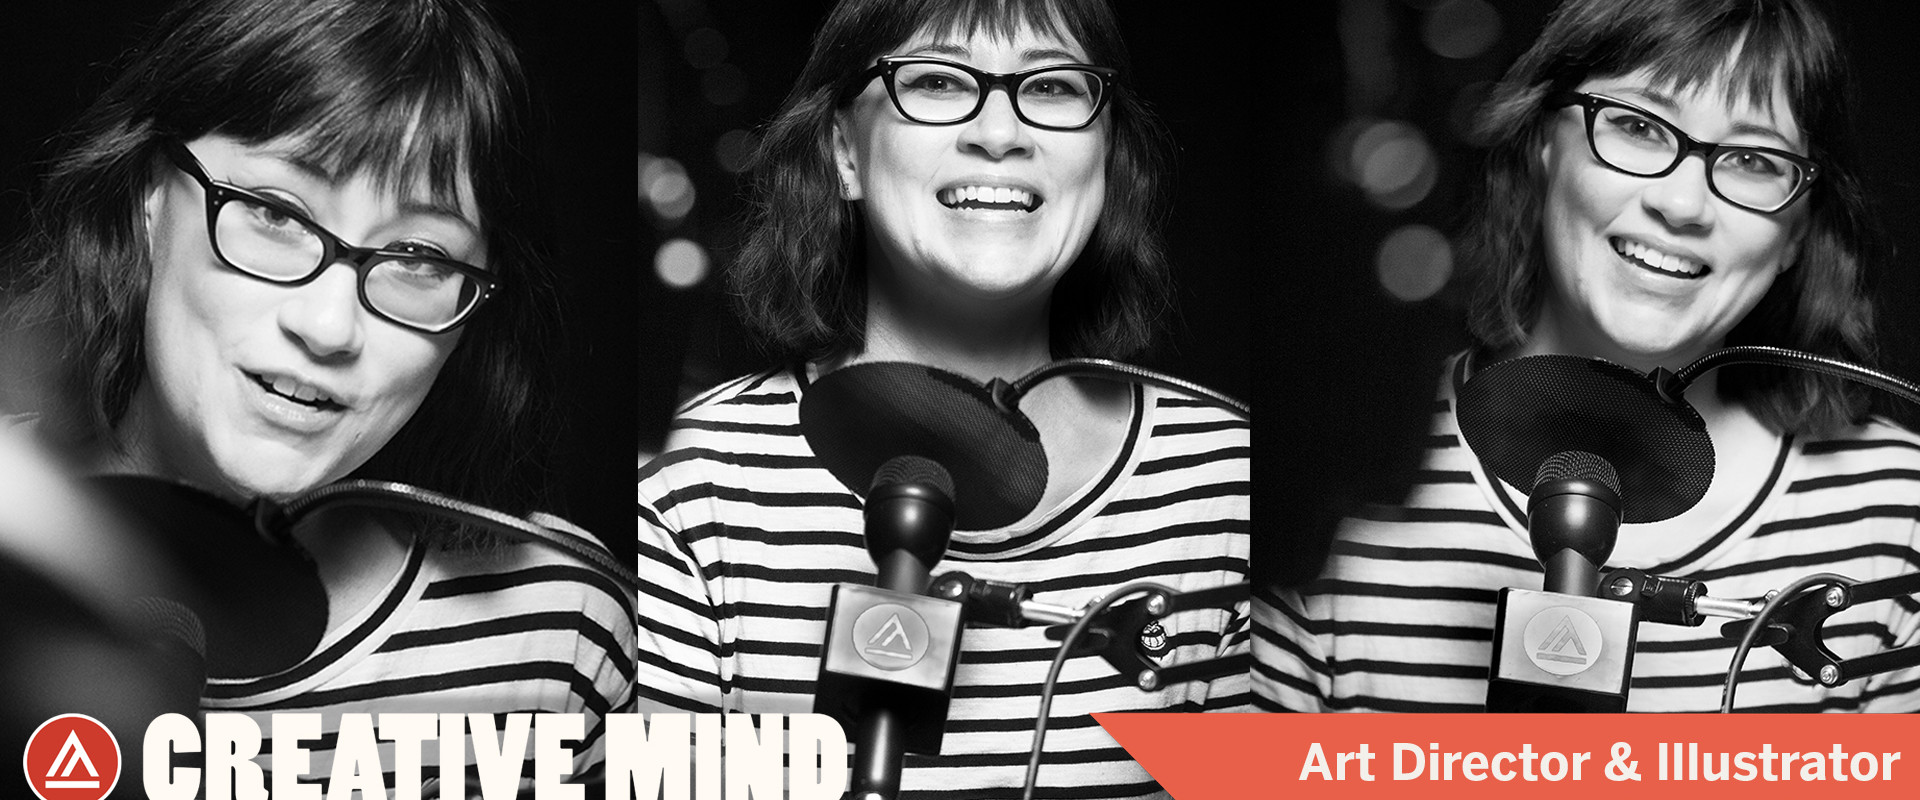 Creative Mind Podcast Episode 1